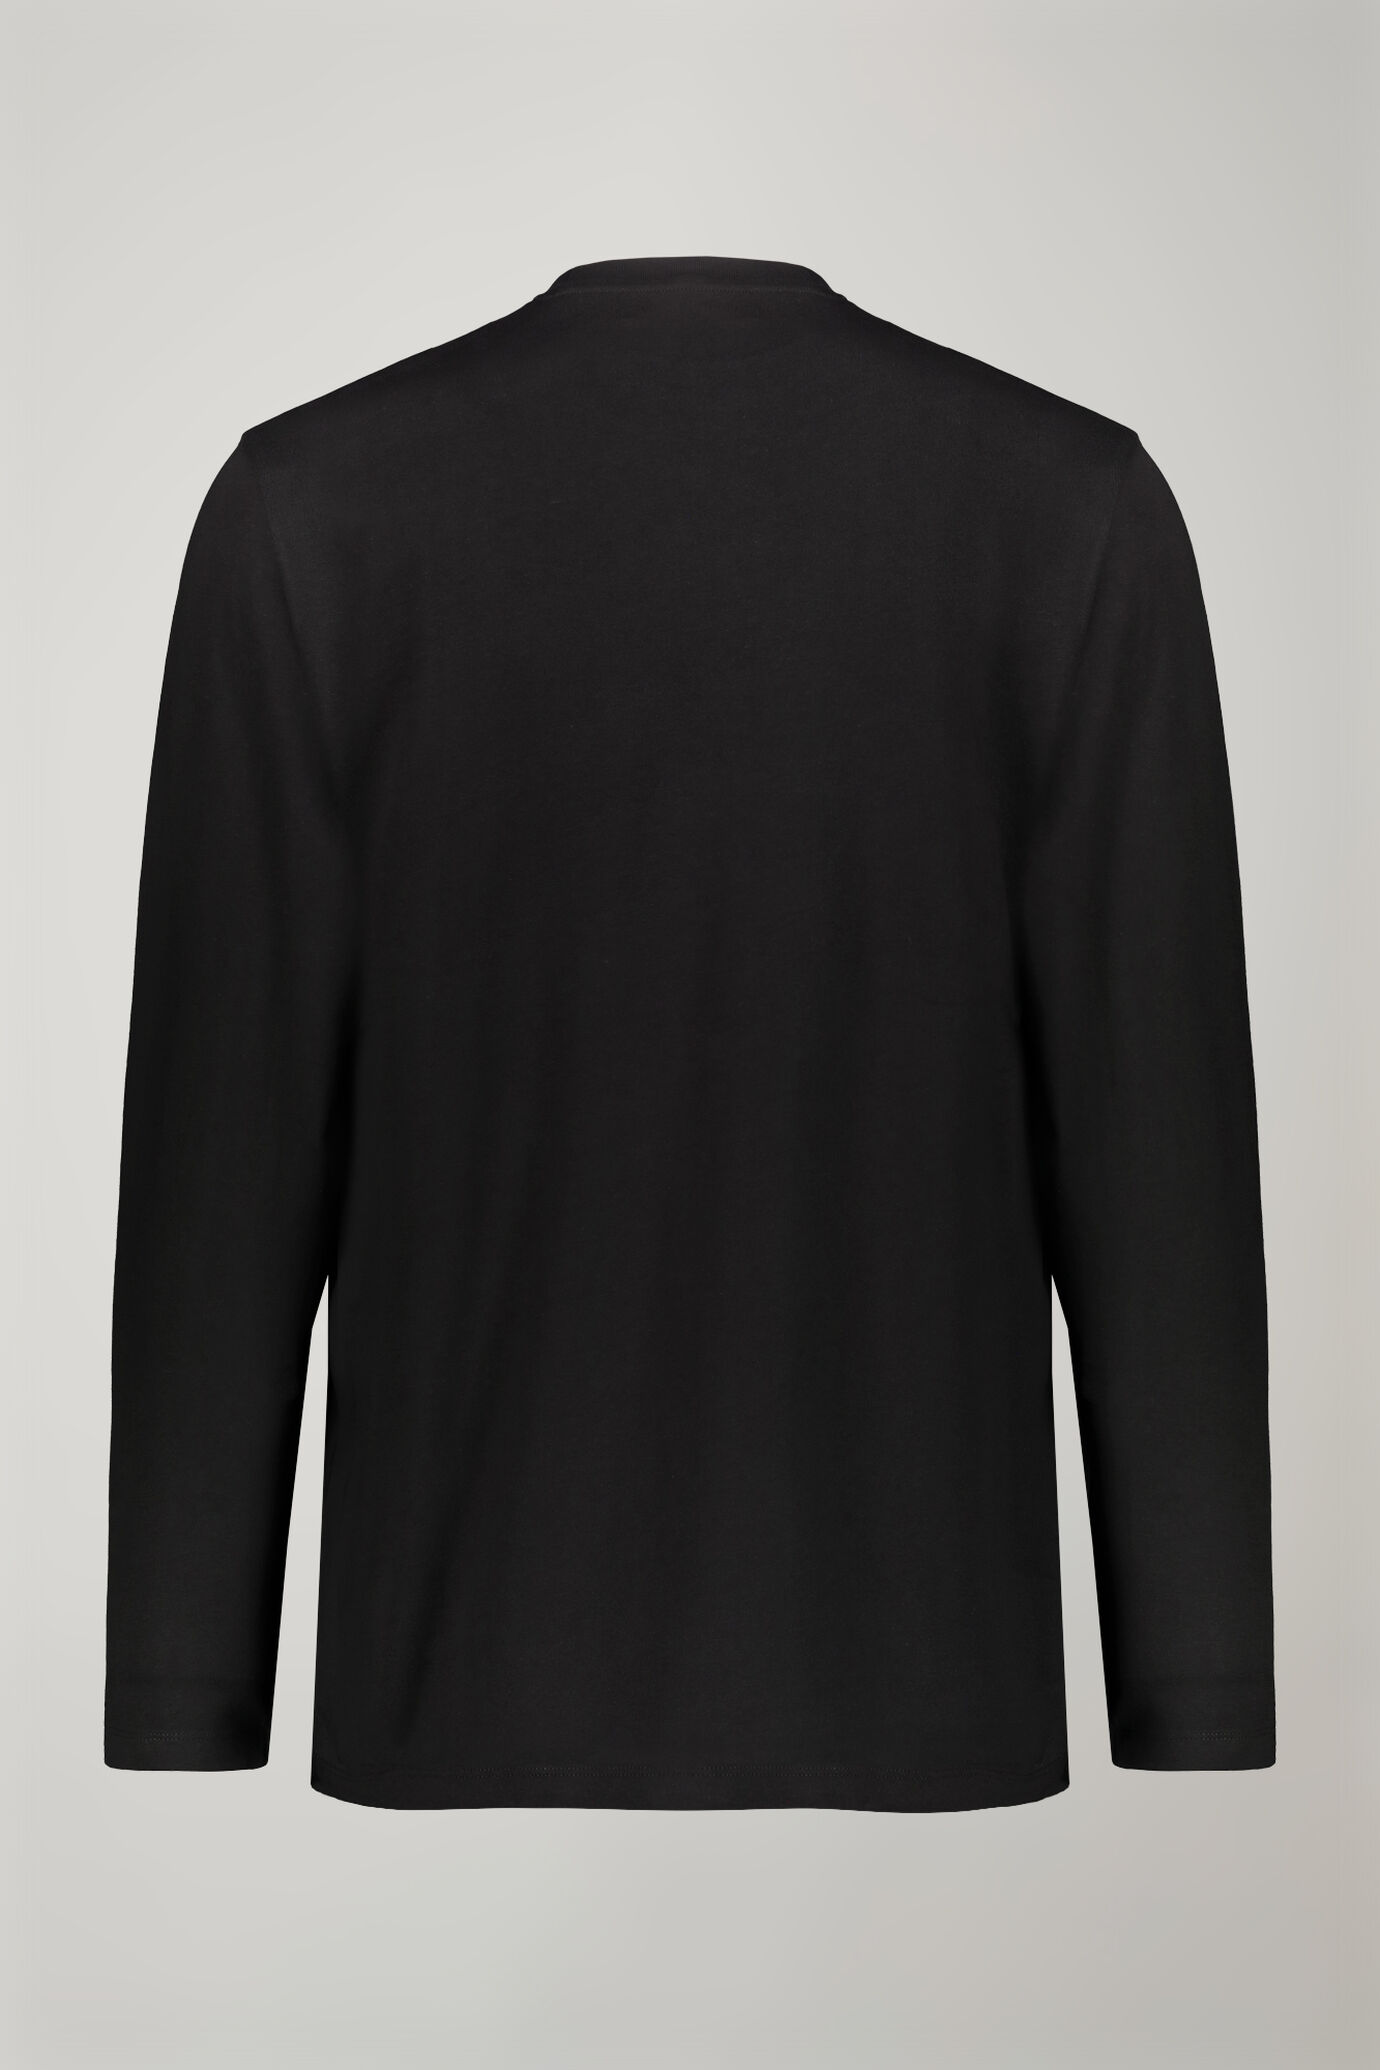 T-shirt uomo girocollo con manica lunga 100% cotone regular fit image number 5